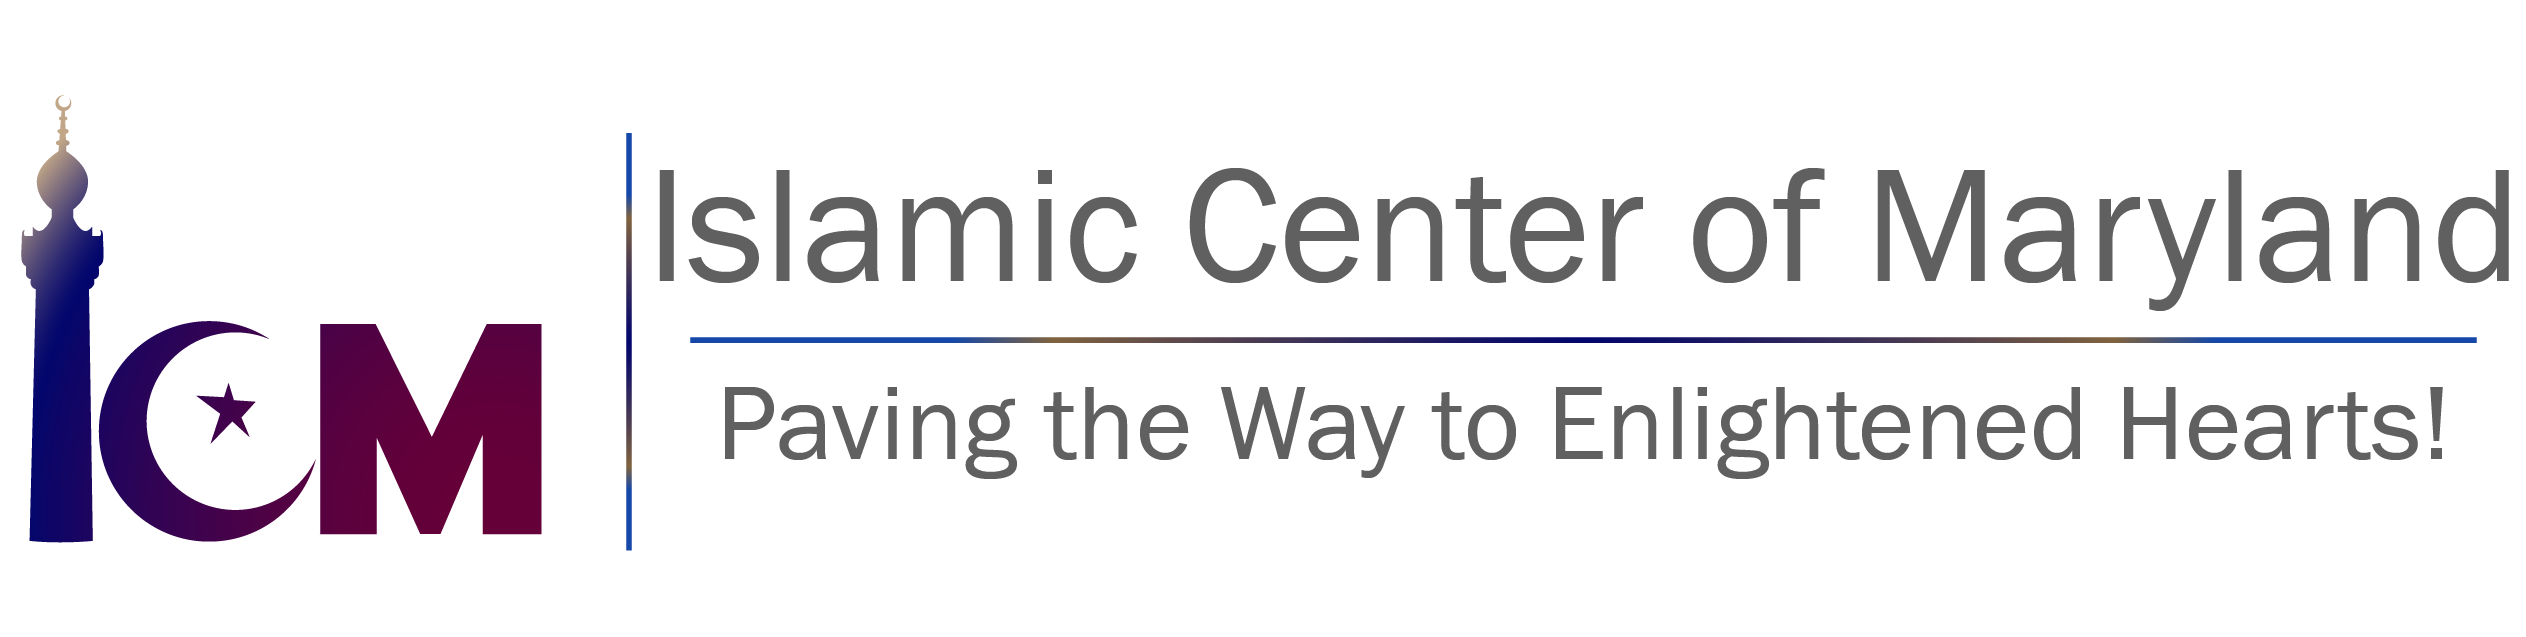 Islamic Center of Maryland